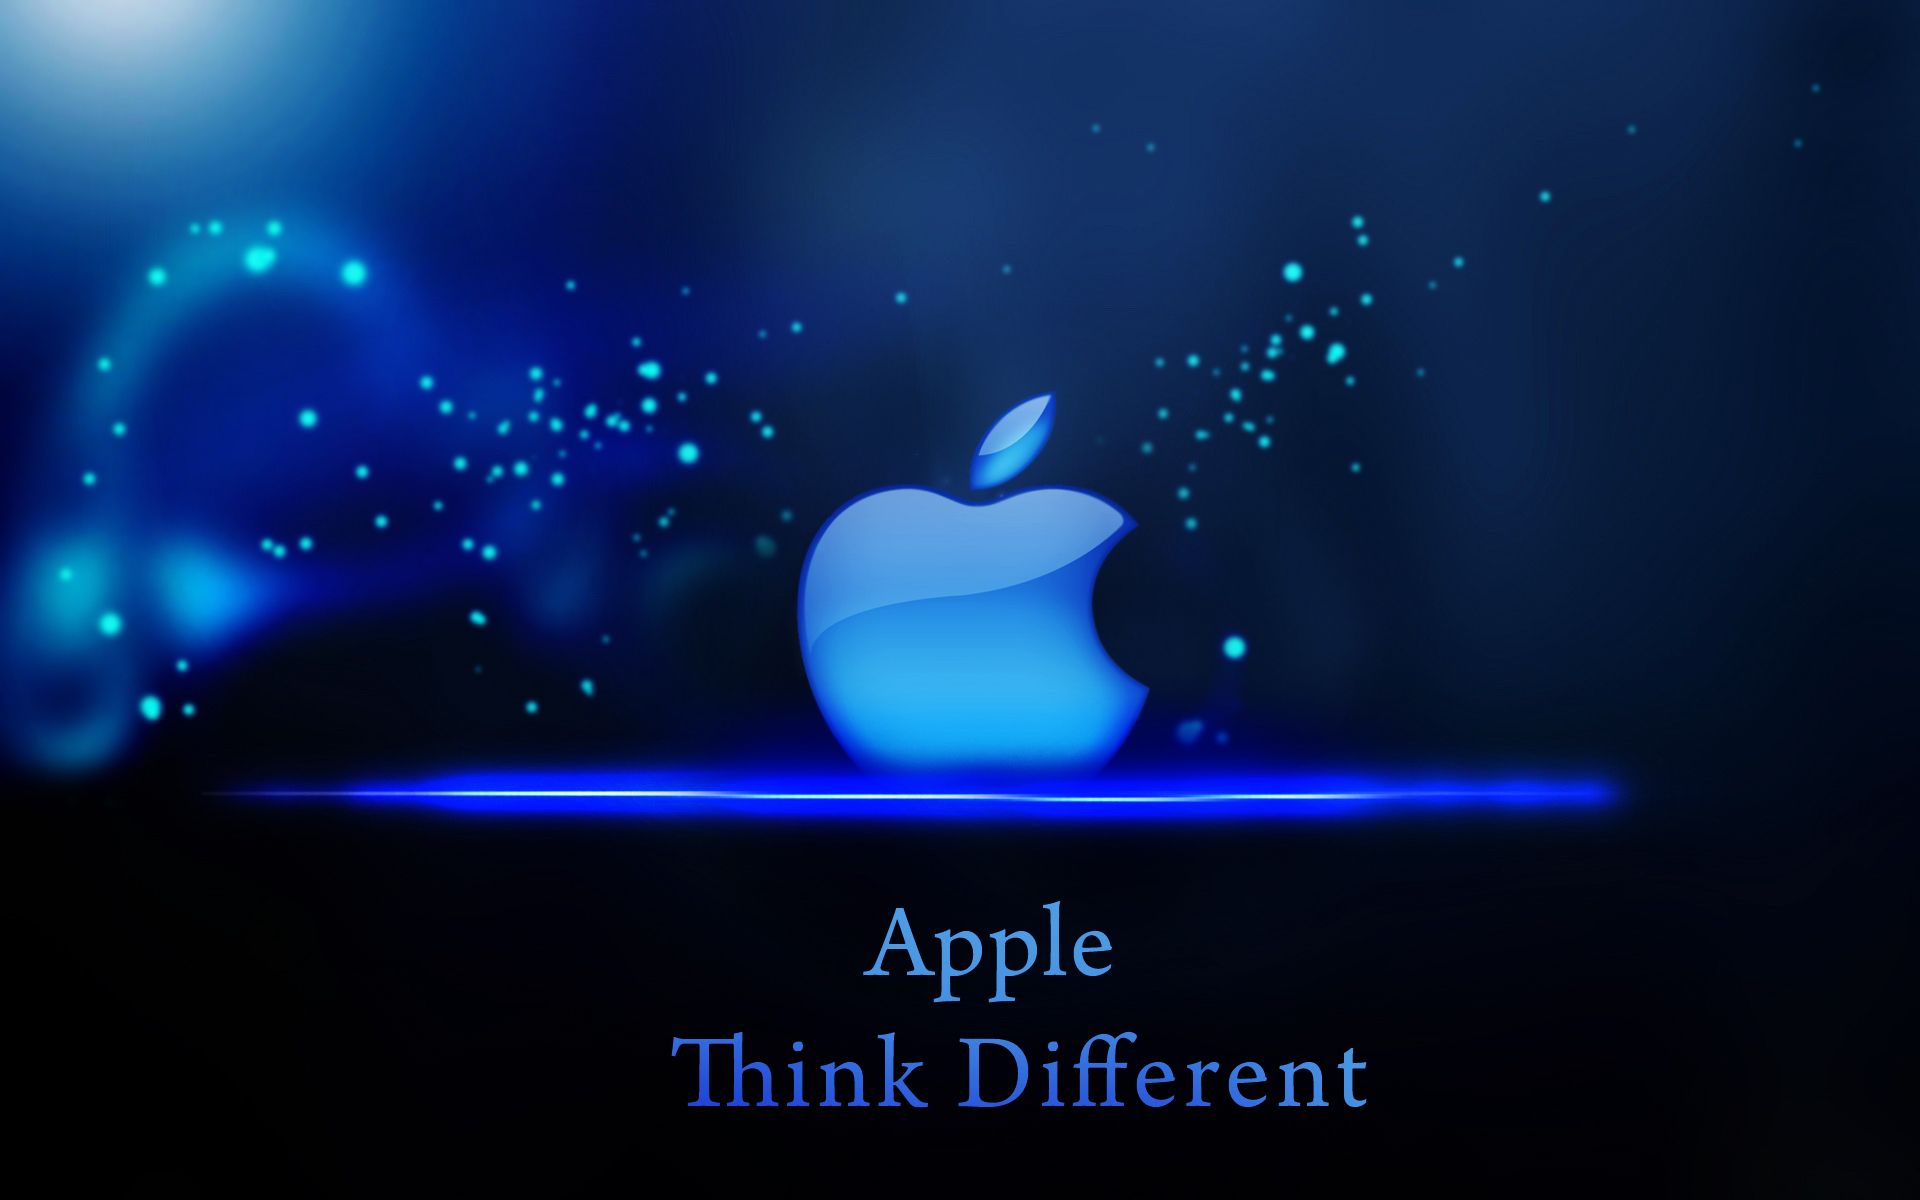 Apple logo wallpaper iphone .com